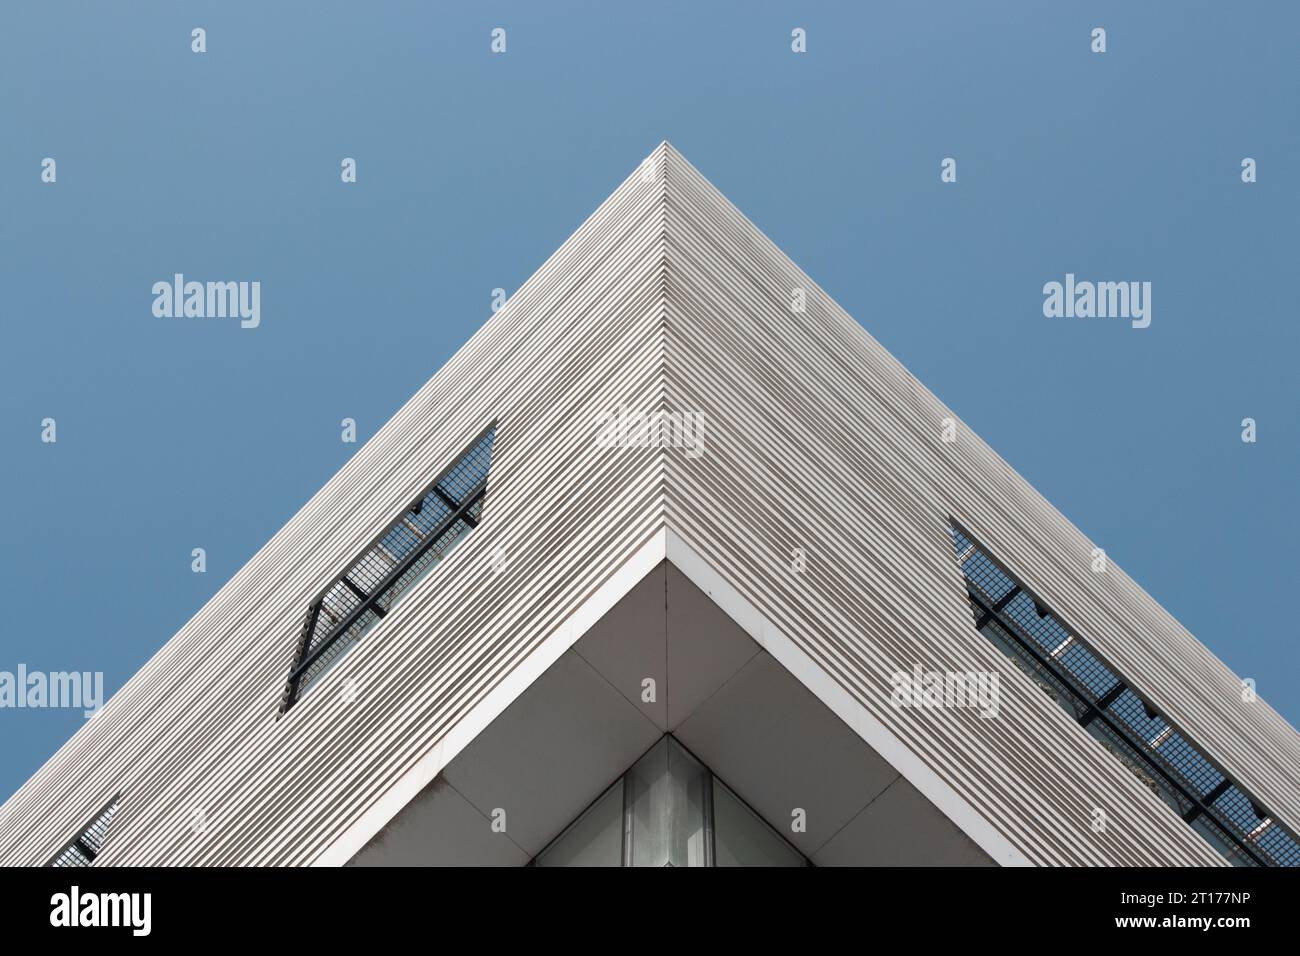 Abstract geometric pattern of a modern aluminium building facade Stock Photo